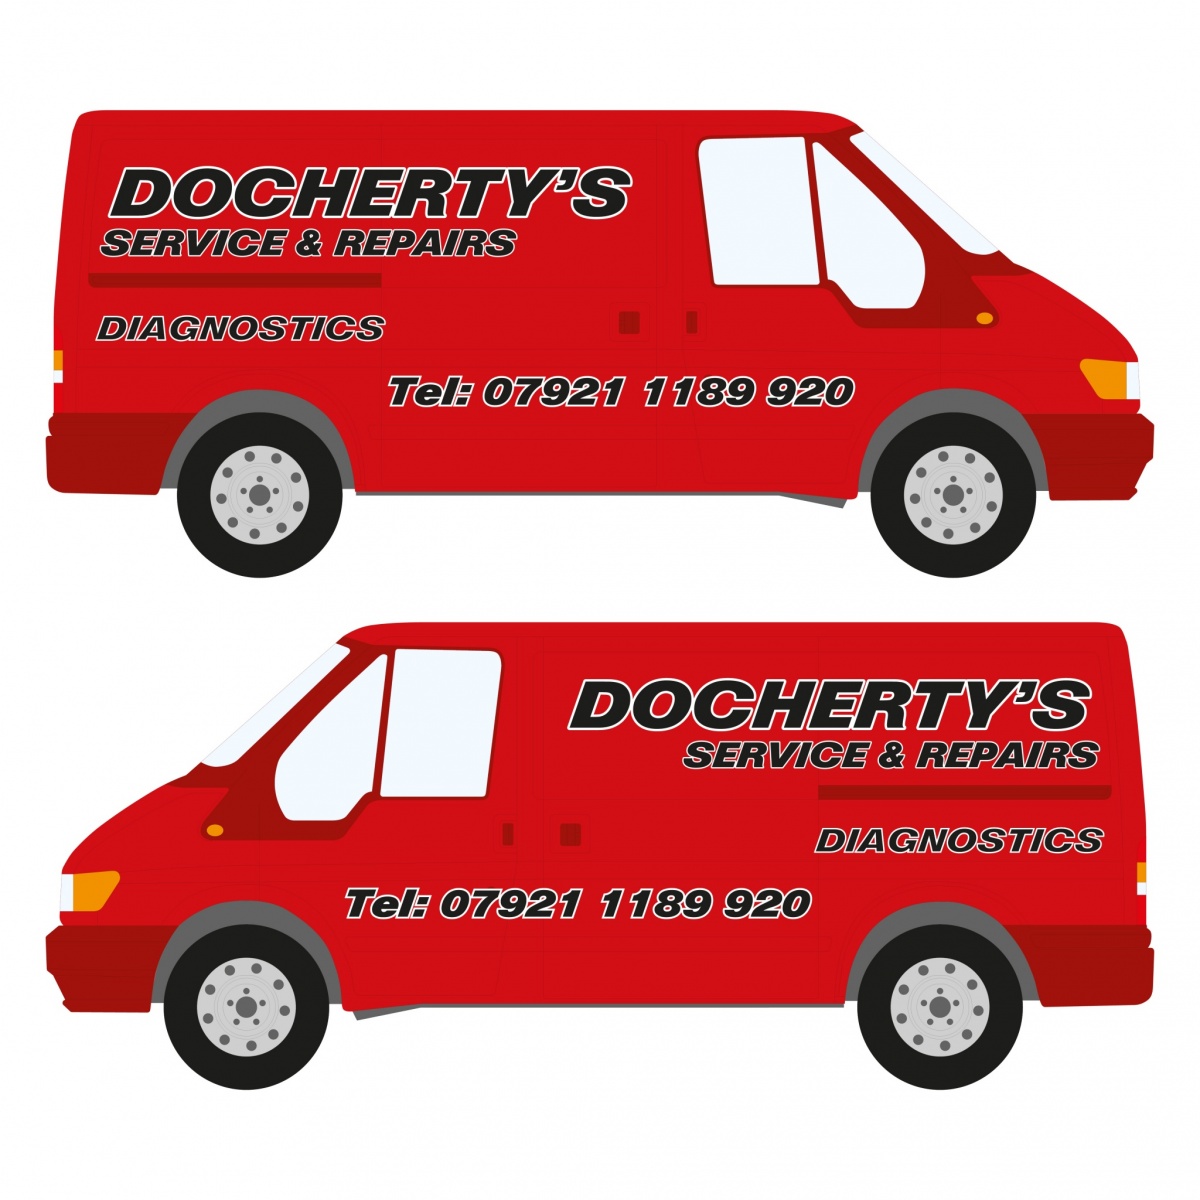 design option for branding on a red van